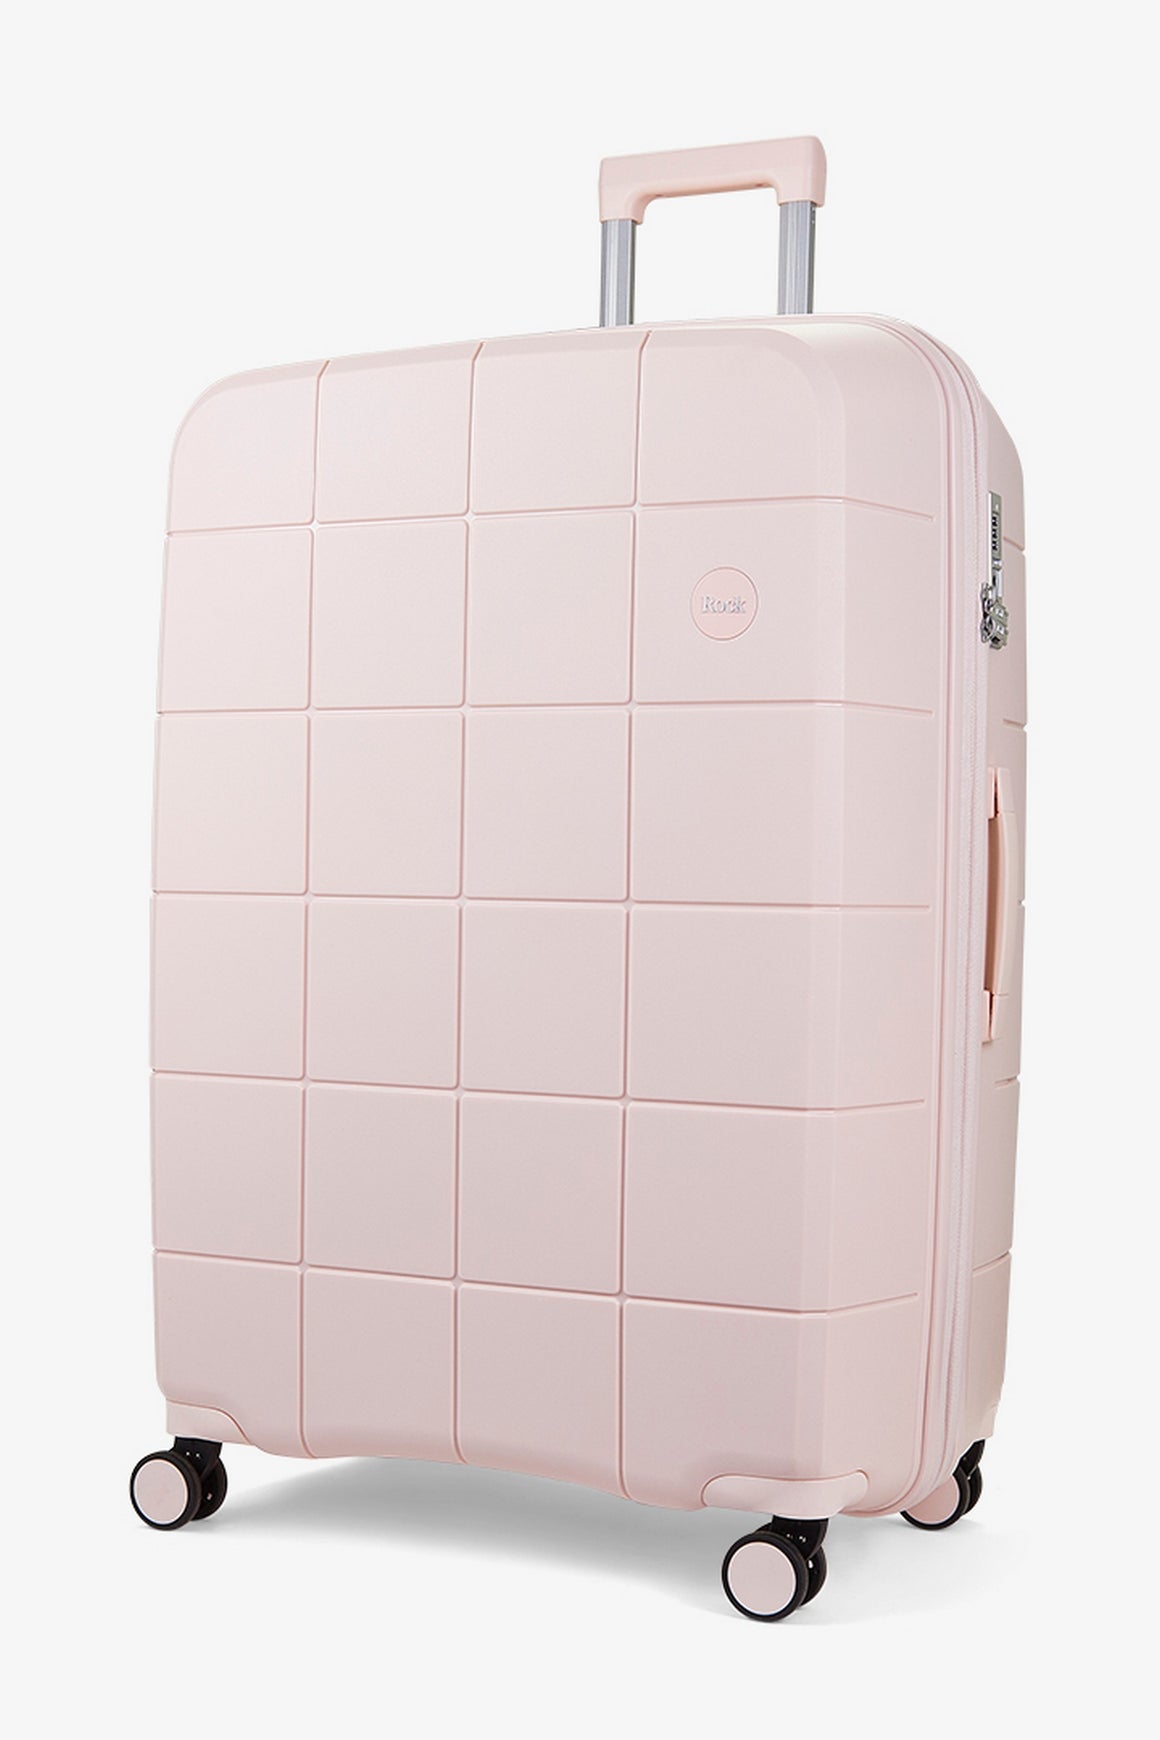 Pixel Set of 3 Suitcase